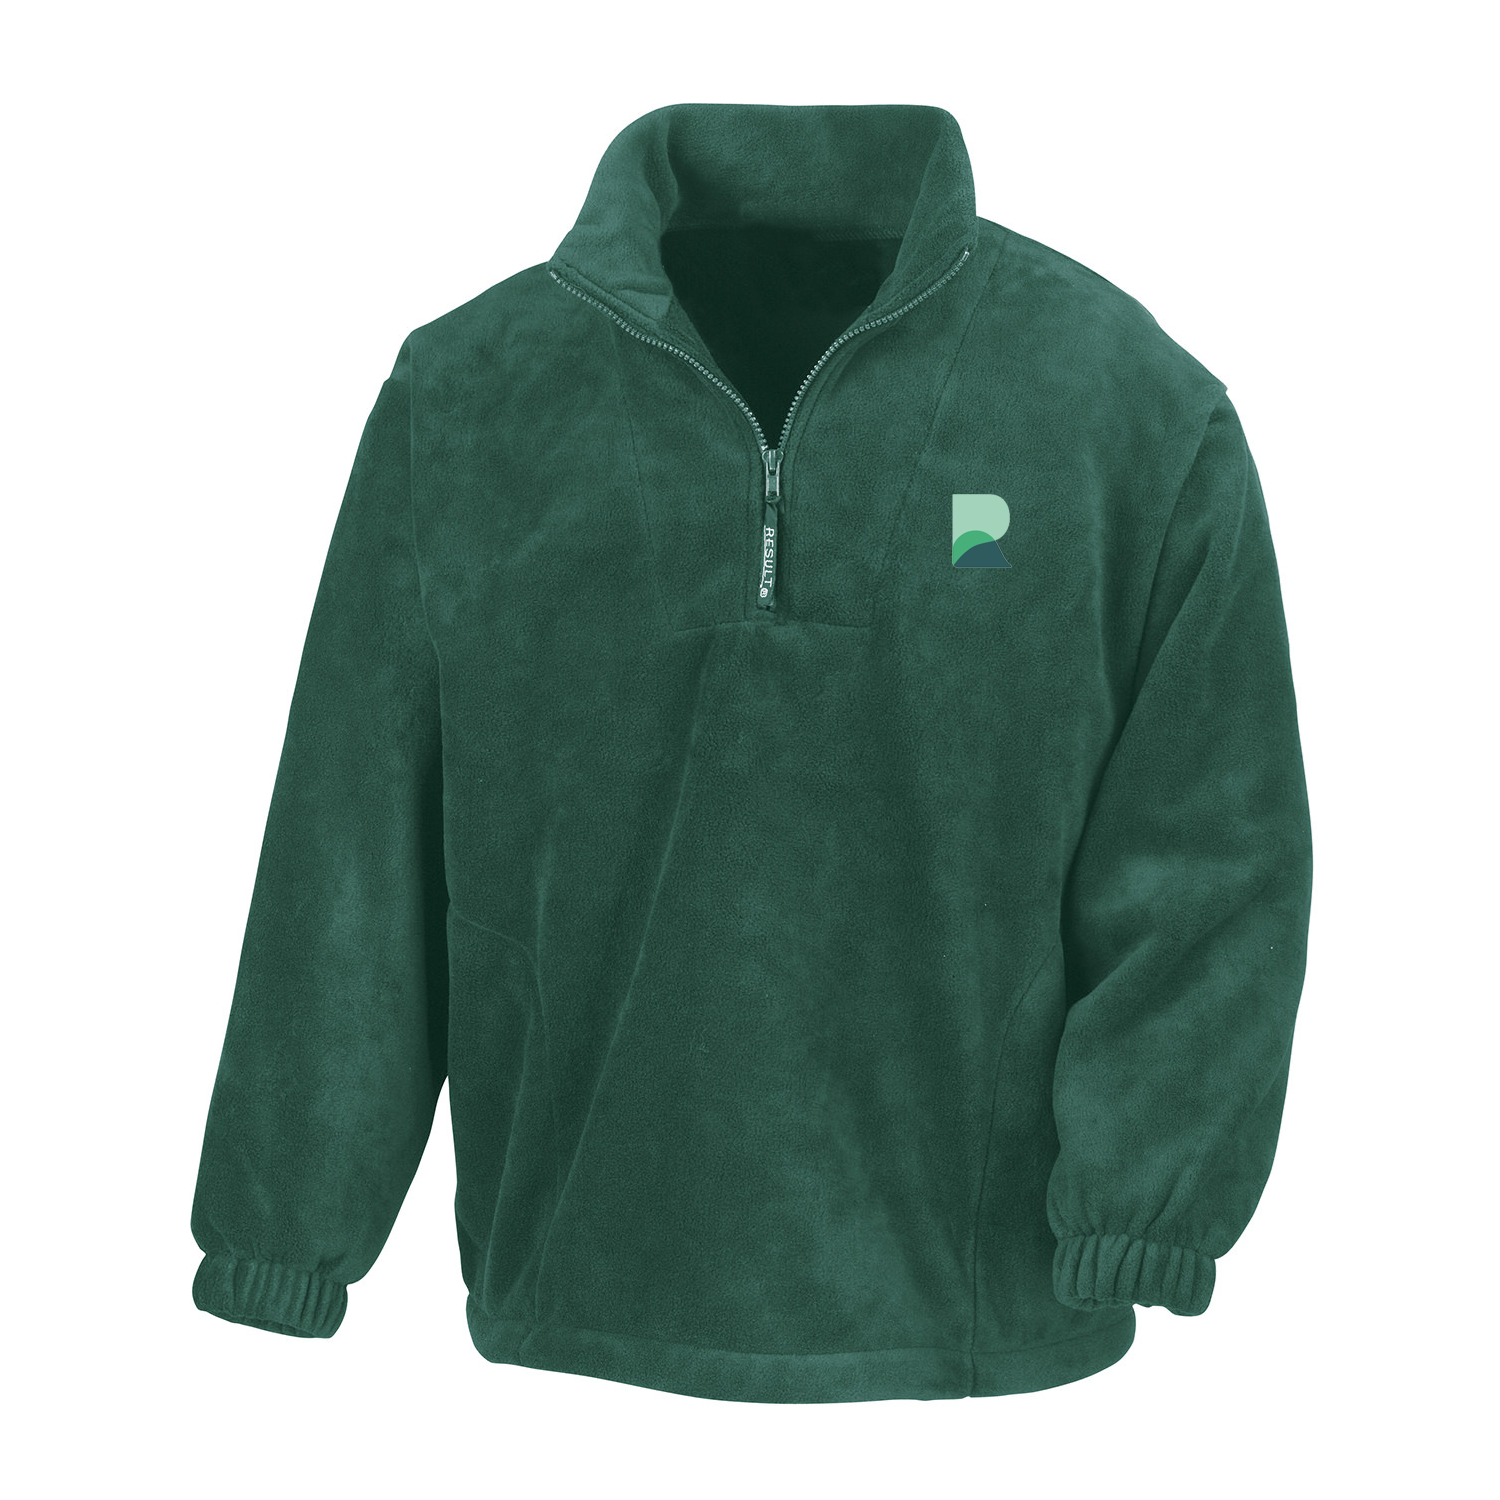 Reach Branded Green Quarter Zip Fleece